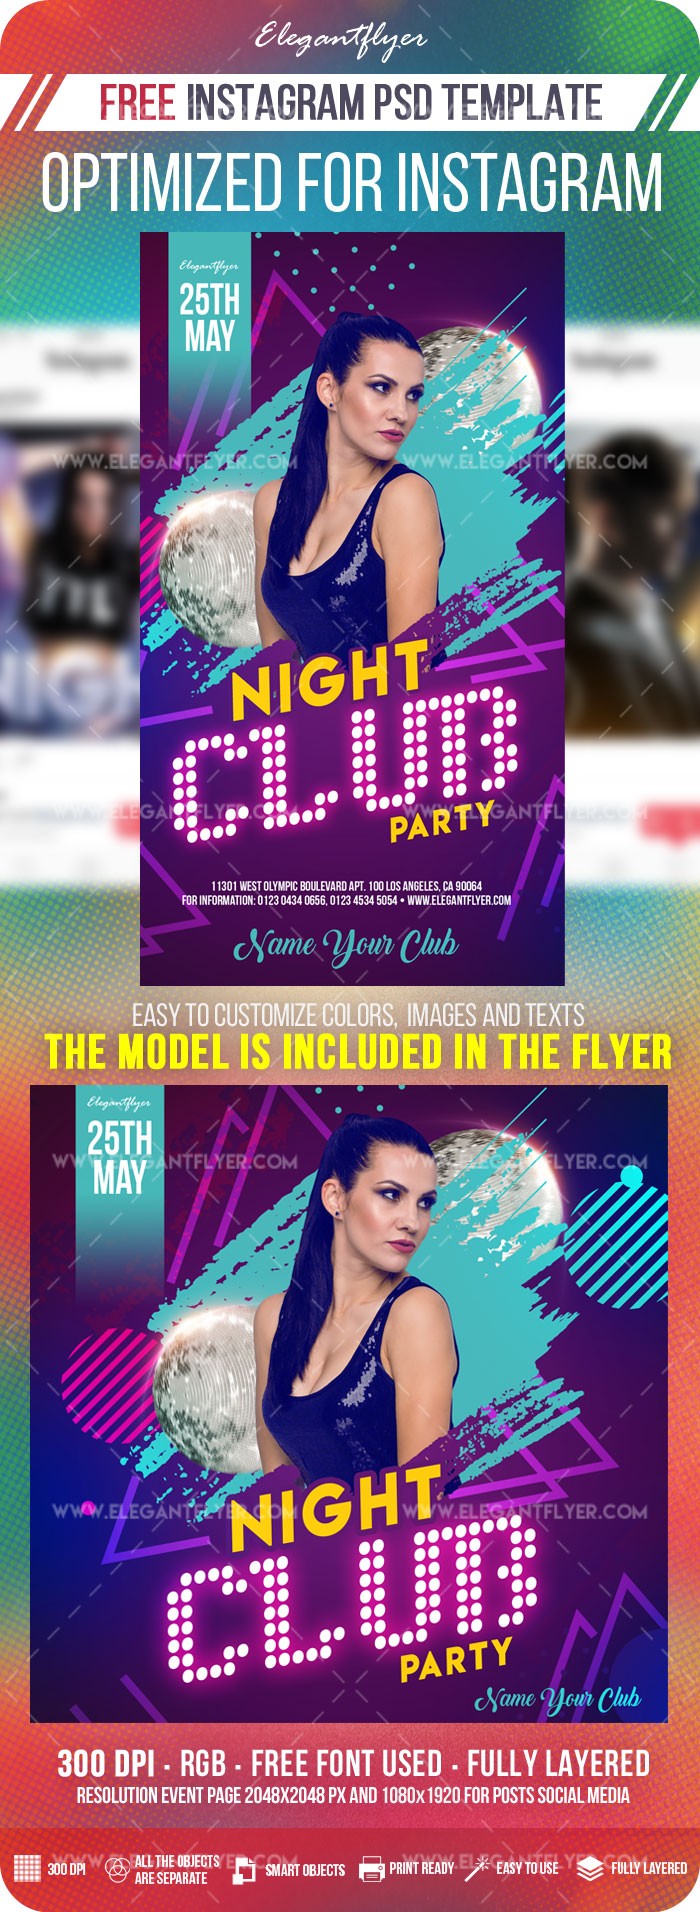 Festa de Night Club no Instagram by ElegantFlyer